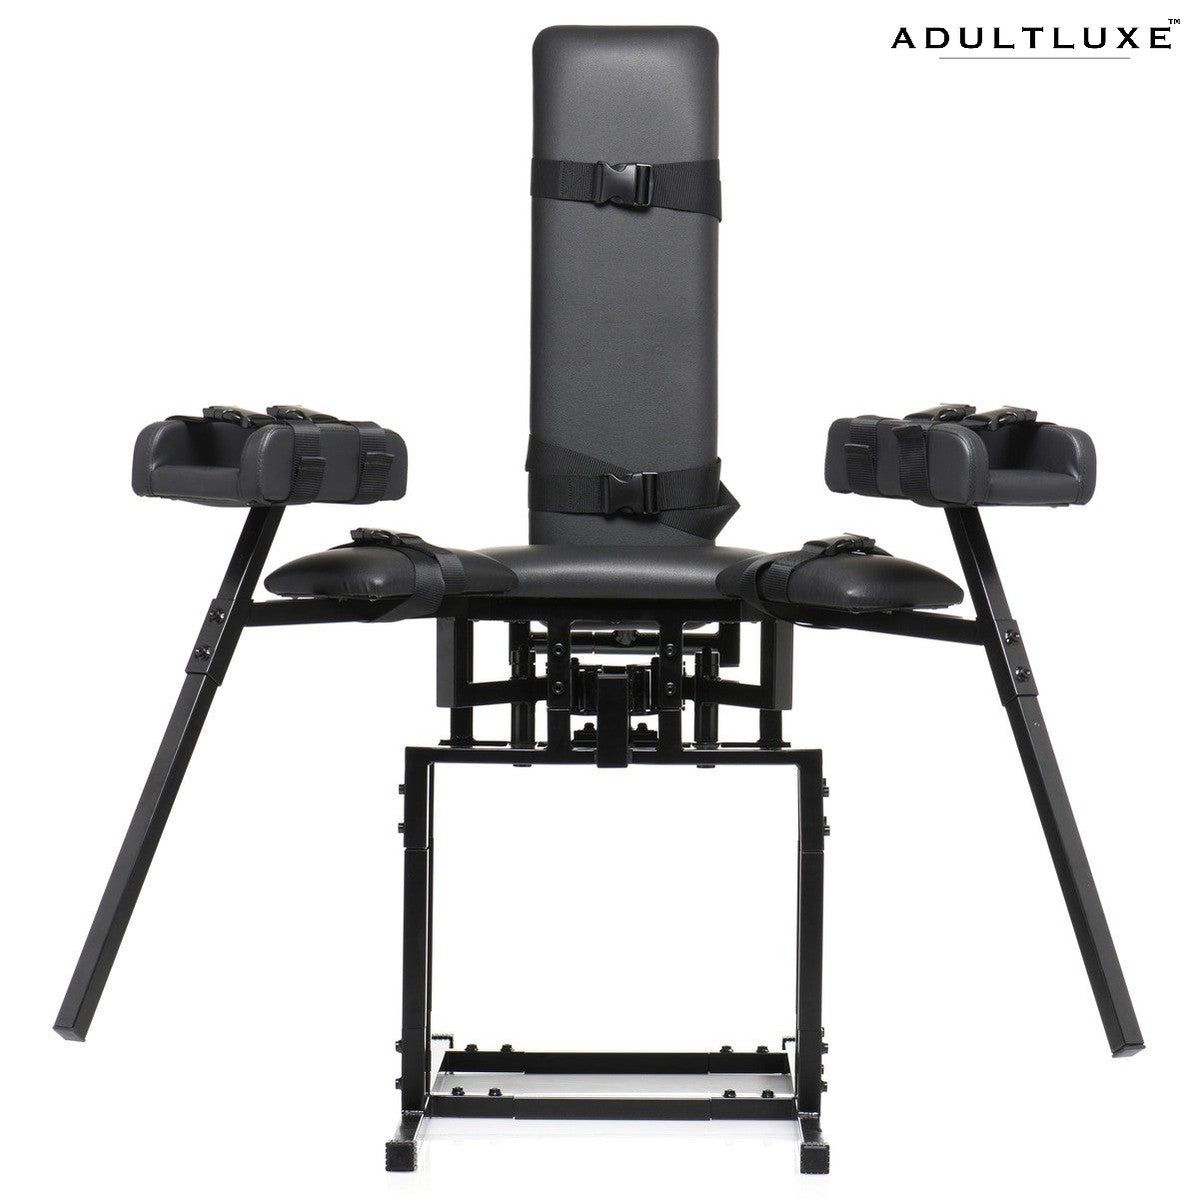 Leg Spreader Obedience Chair - AdultLuxe